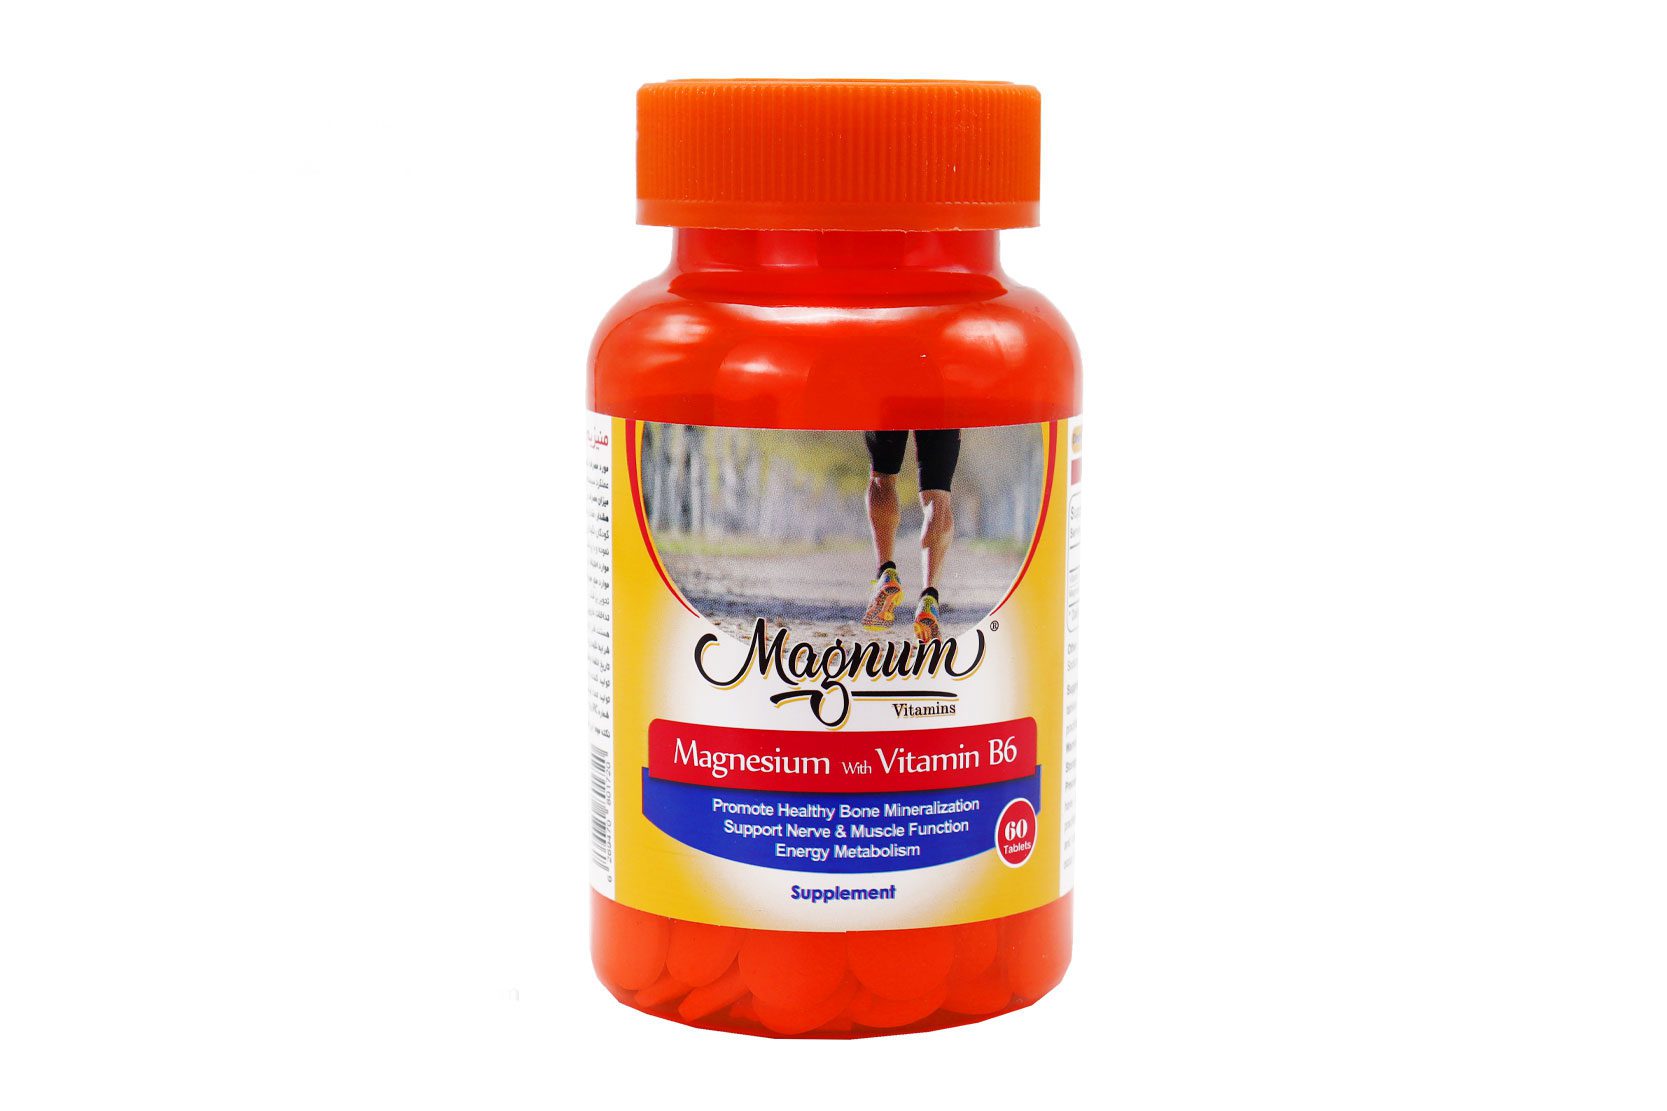 قرص منیزیم و ویتامین B6 مگنوم ویتامینز |۶۰ عدد|حفظ سلامت سیستم عصبی و عضلانی